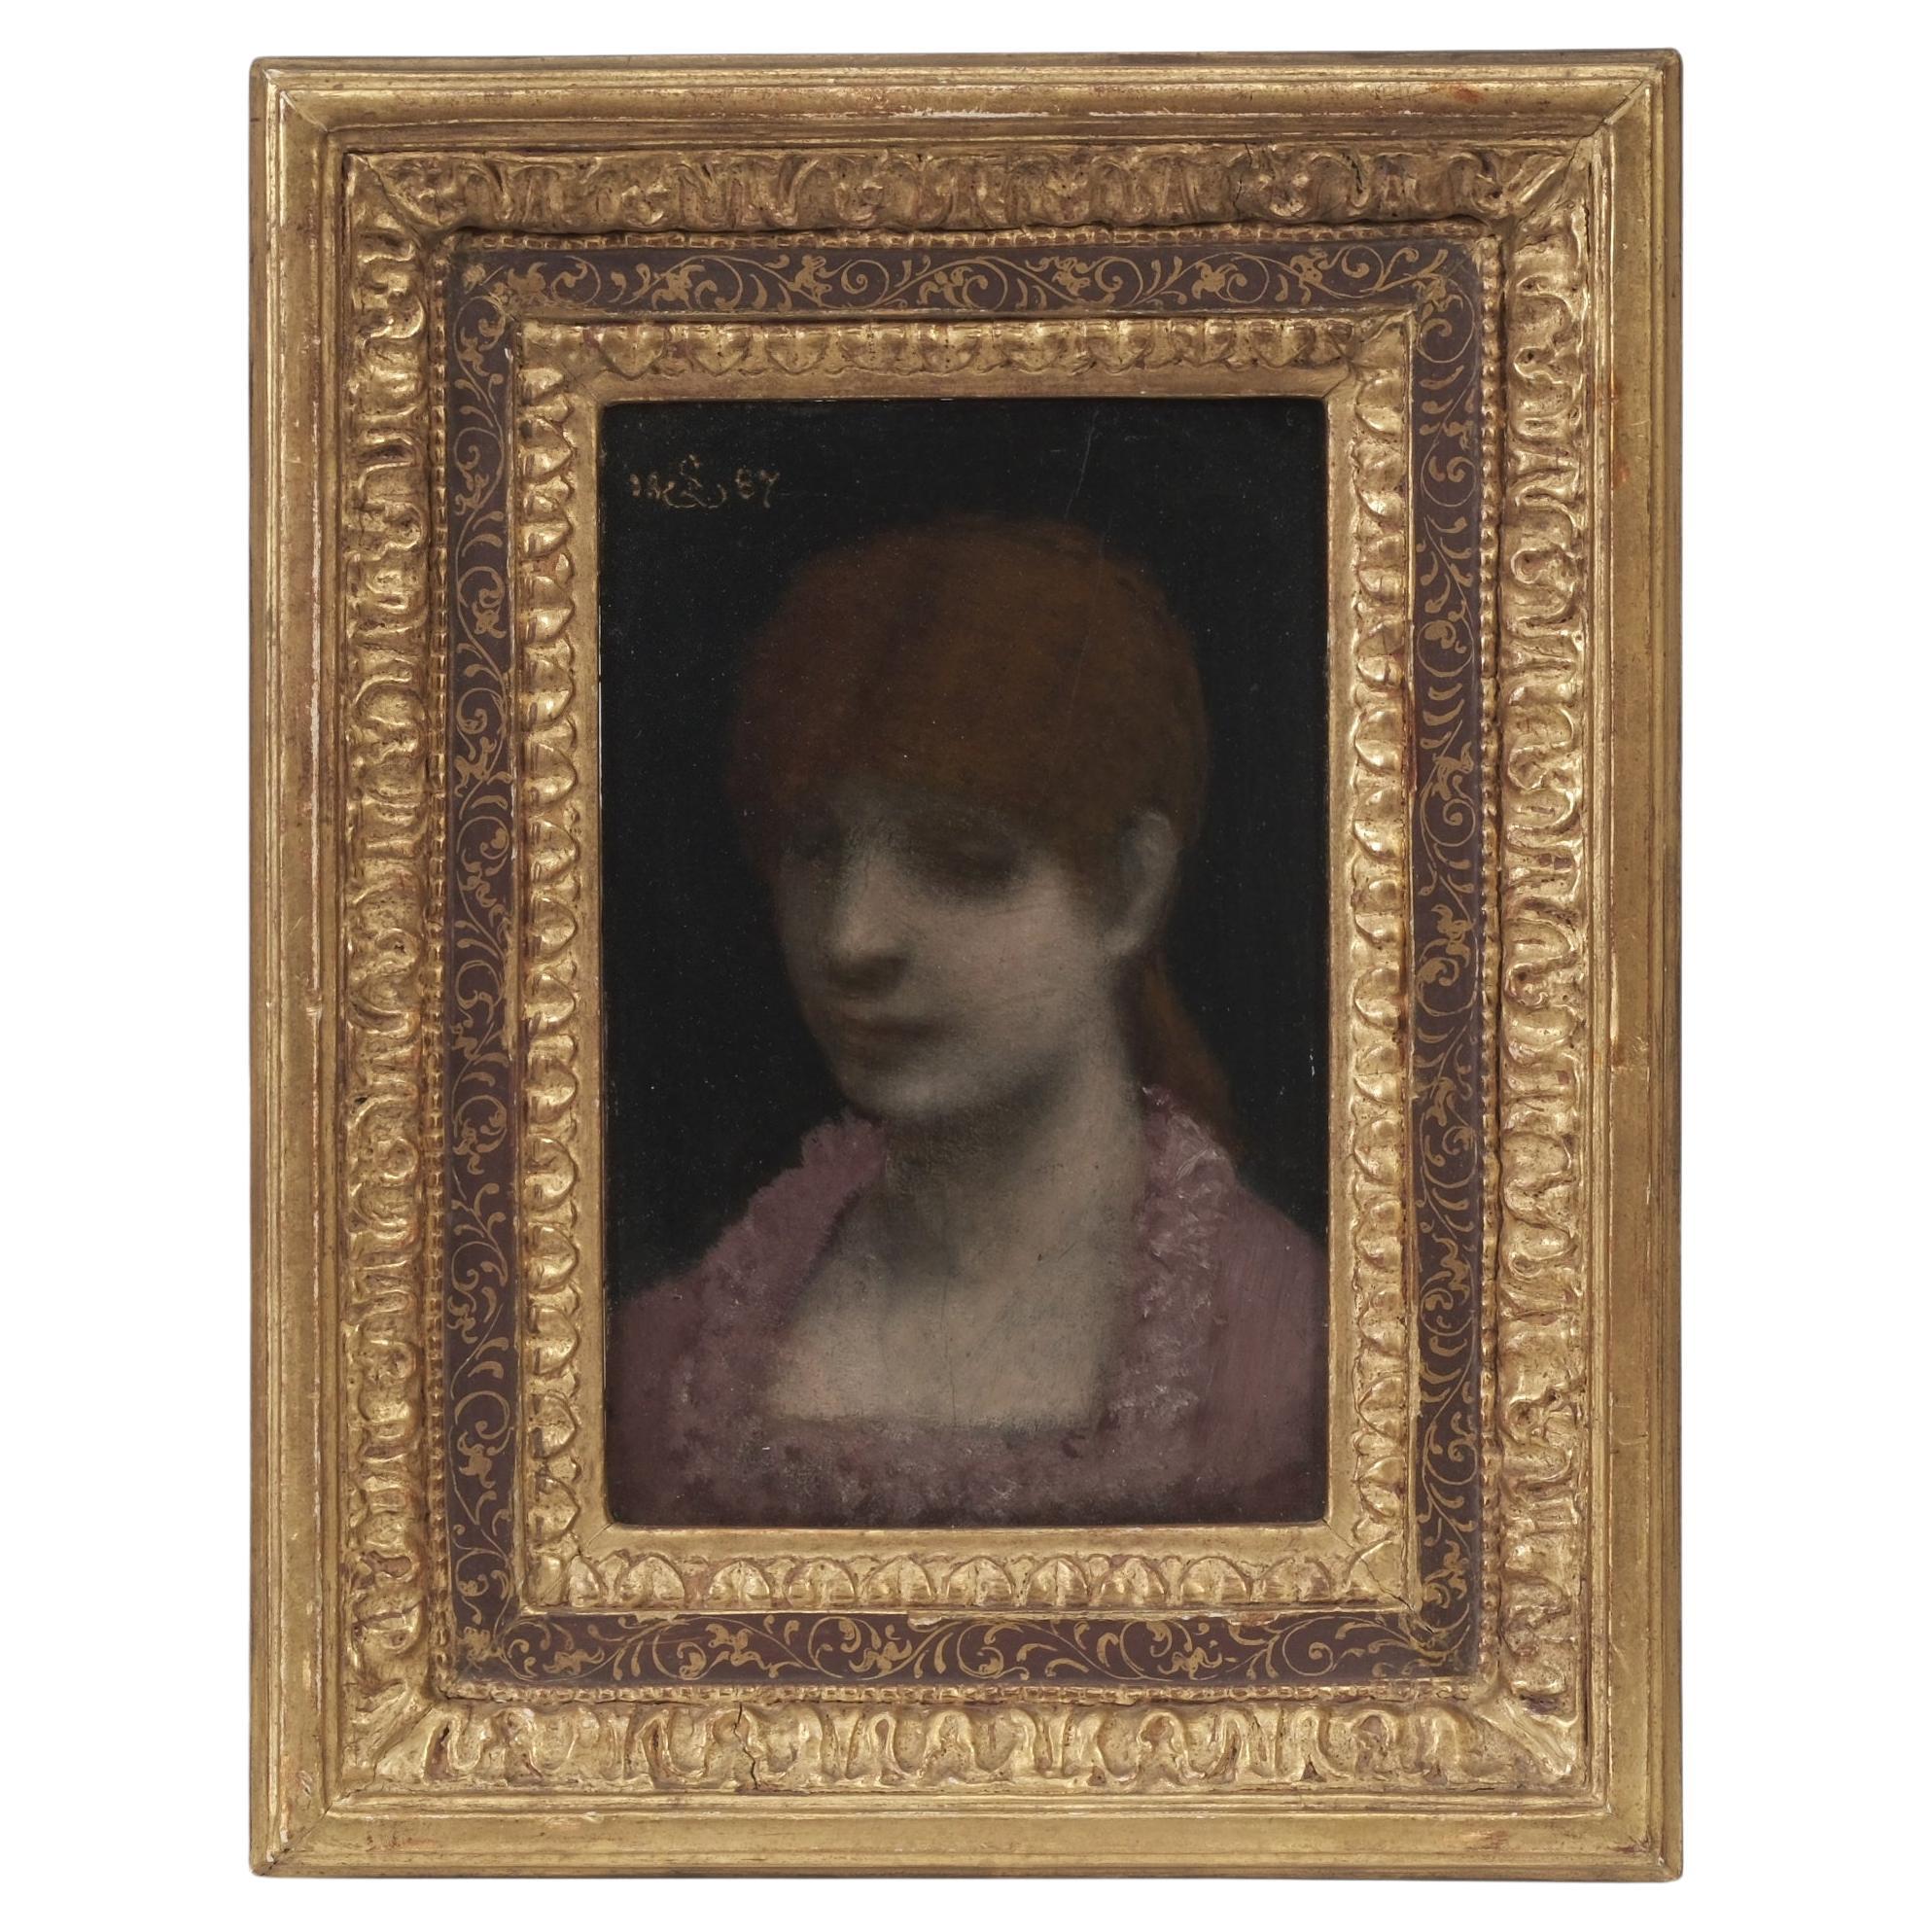 Sigmund Landsinger, Gemälde einer jungen Frau, 19. Jahrhundert, Sigmund Landsinger 